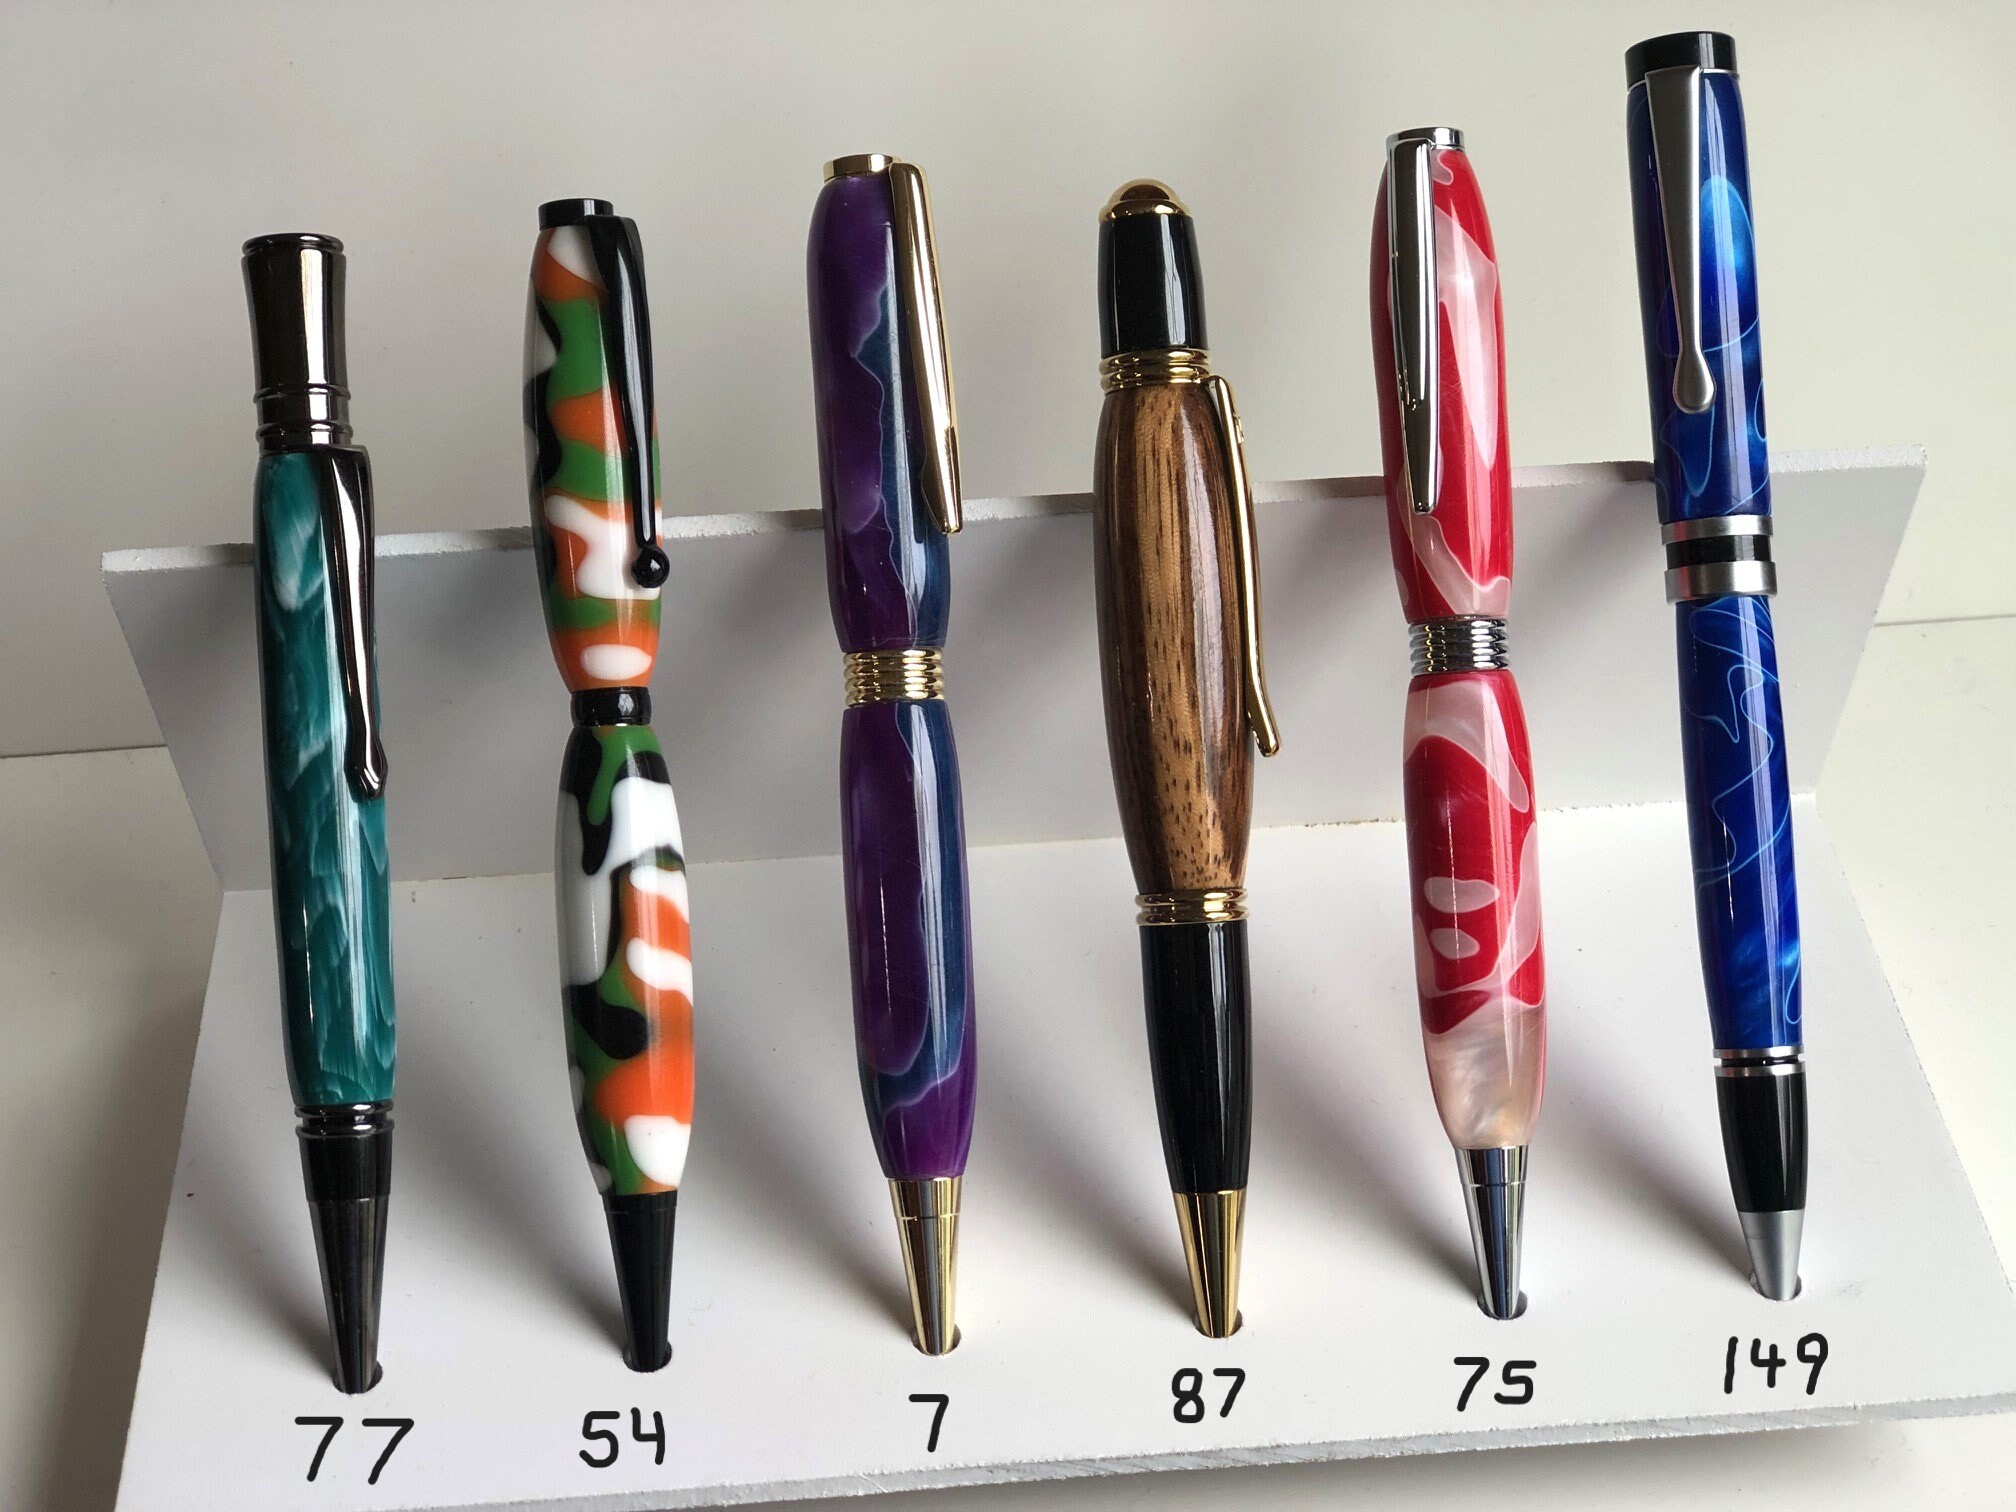 Colarr 30 Pcs Slimline Pen Kit Wood Turning Pen Kits Twist Pen Kit with  Refill Lathe Turning Supplies for DIY Pen Making Office Supplies Friend